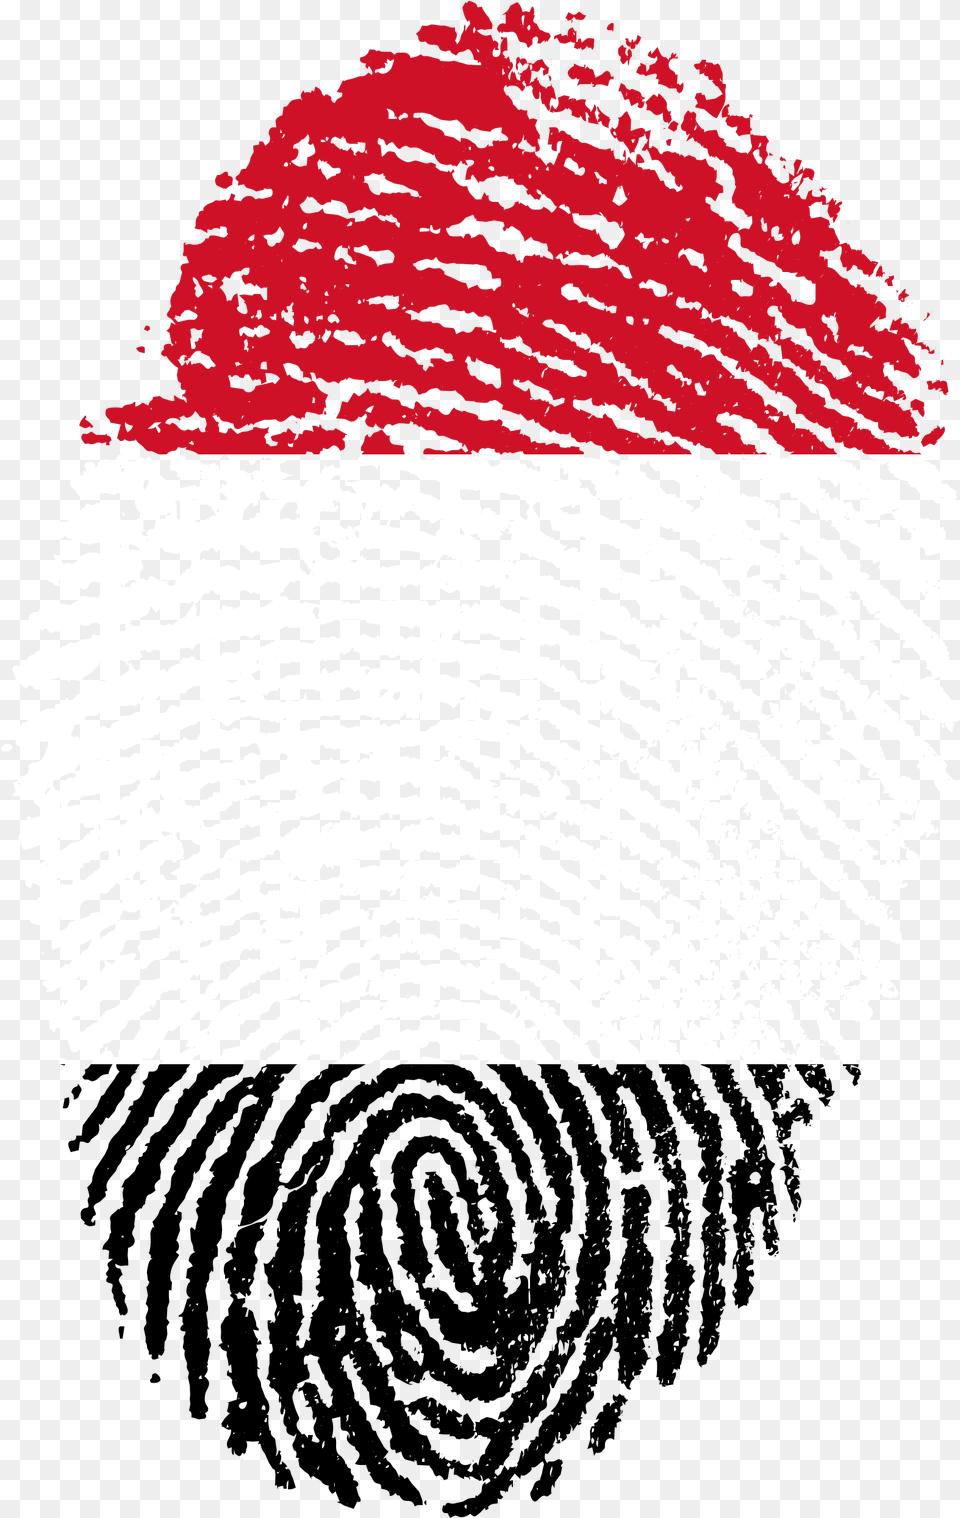 Yemen Flag Fingerprint Drawing Image Challenges Of Digital India, Home Decor, Texture Free Transparent Png